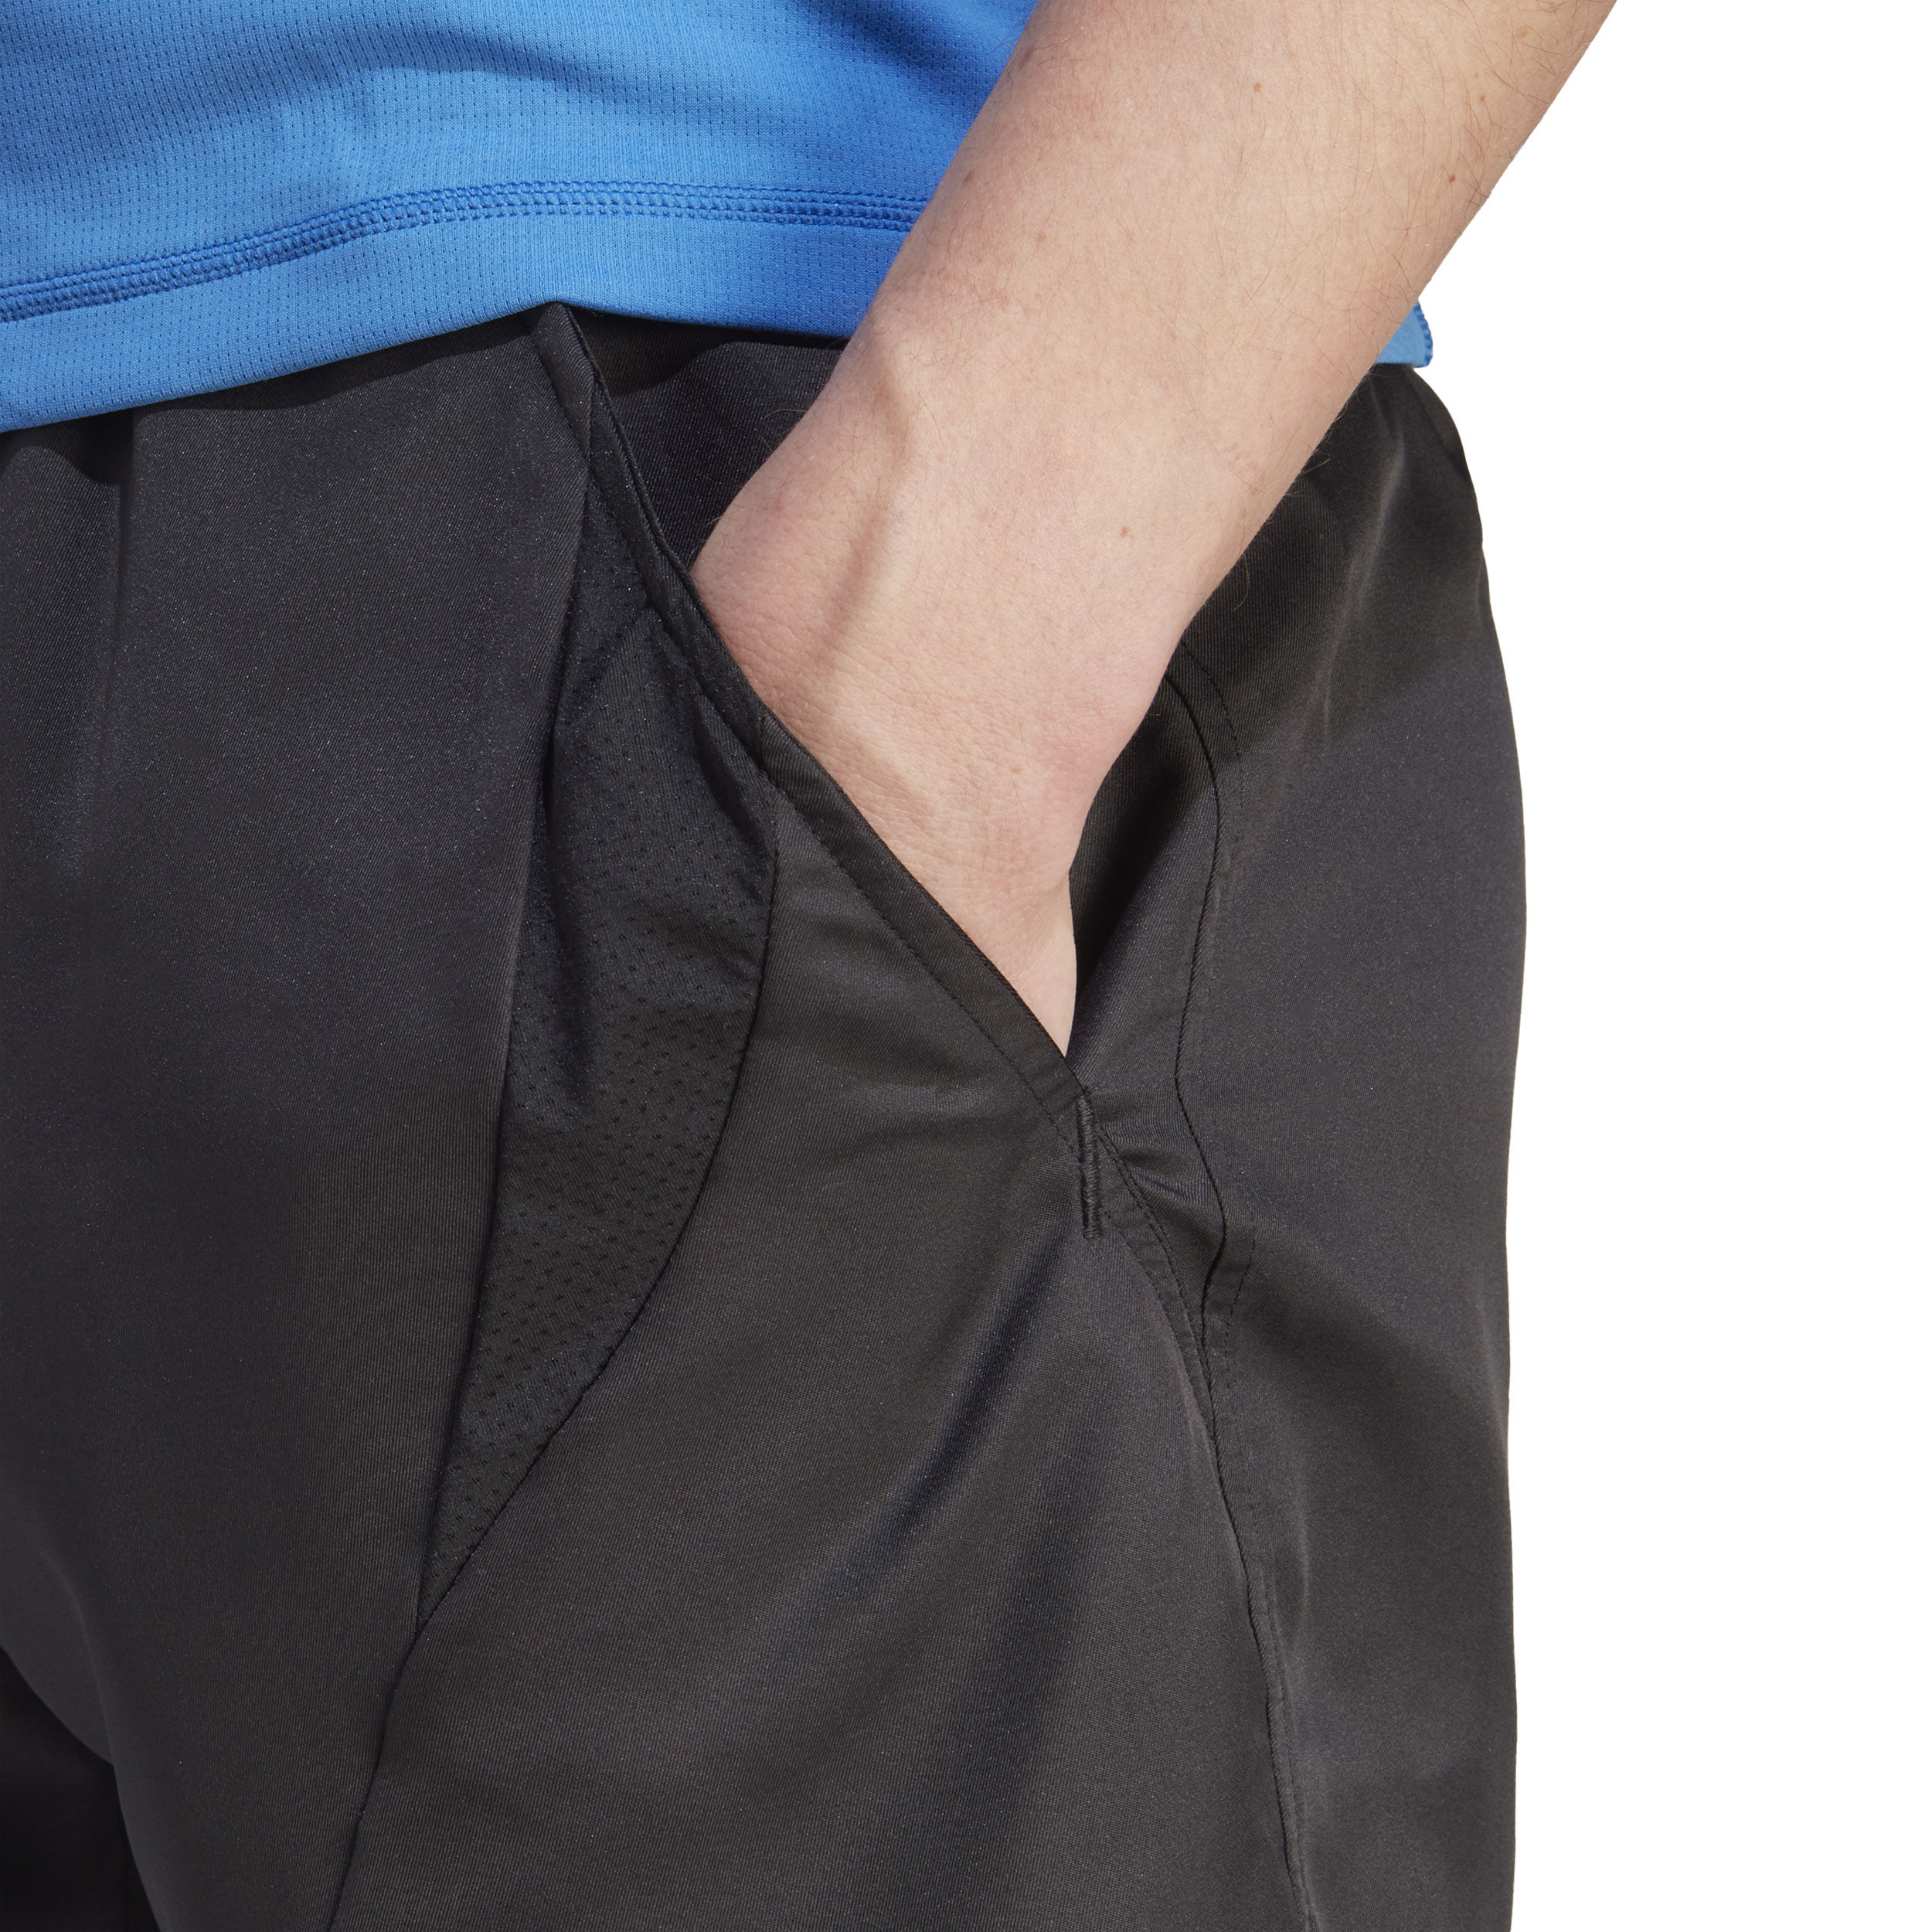 Adidas Women Originals 3-Stripe Shorts Training Pants Black Yoga Jersey  DV2555 | eBay